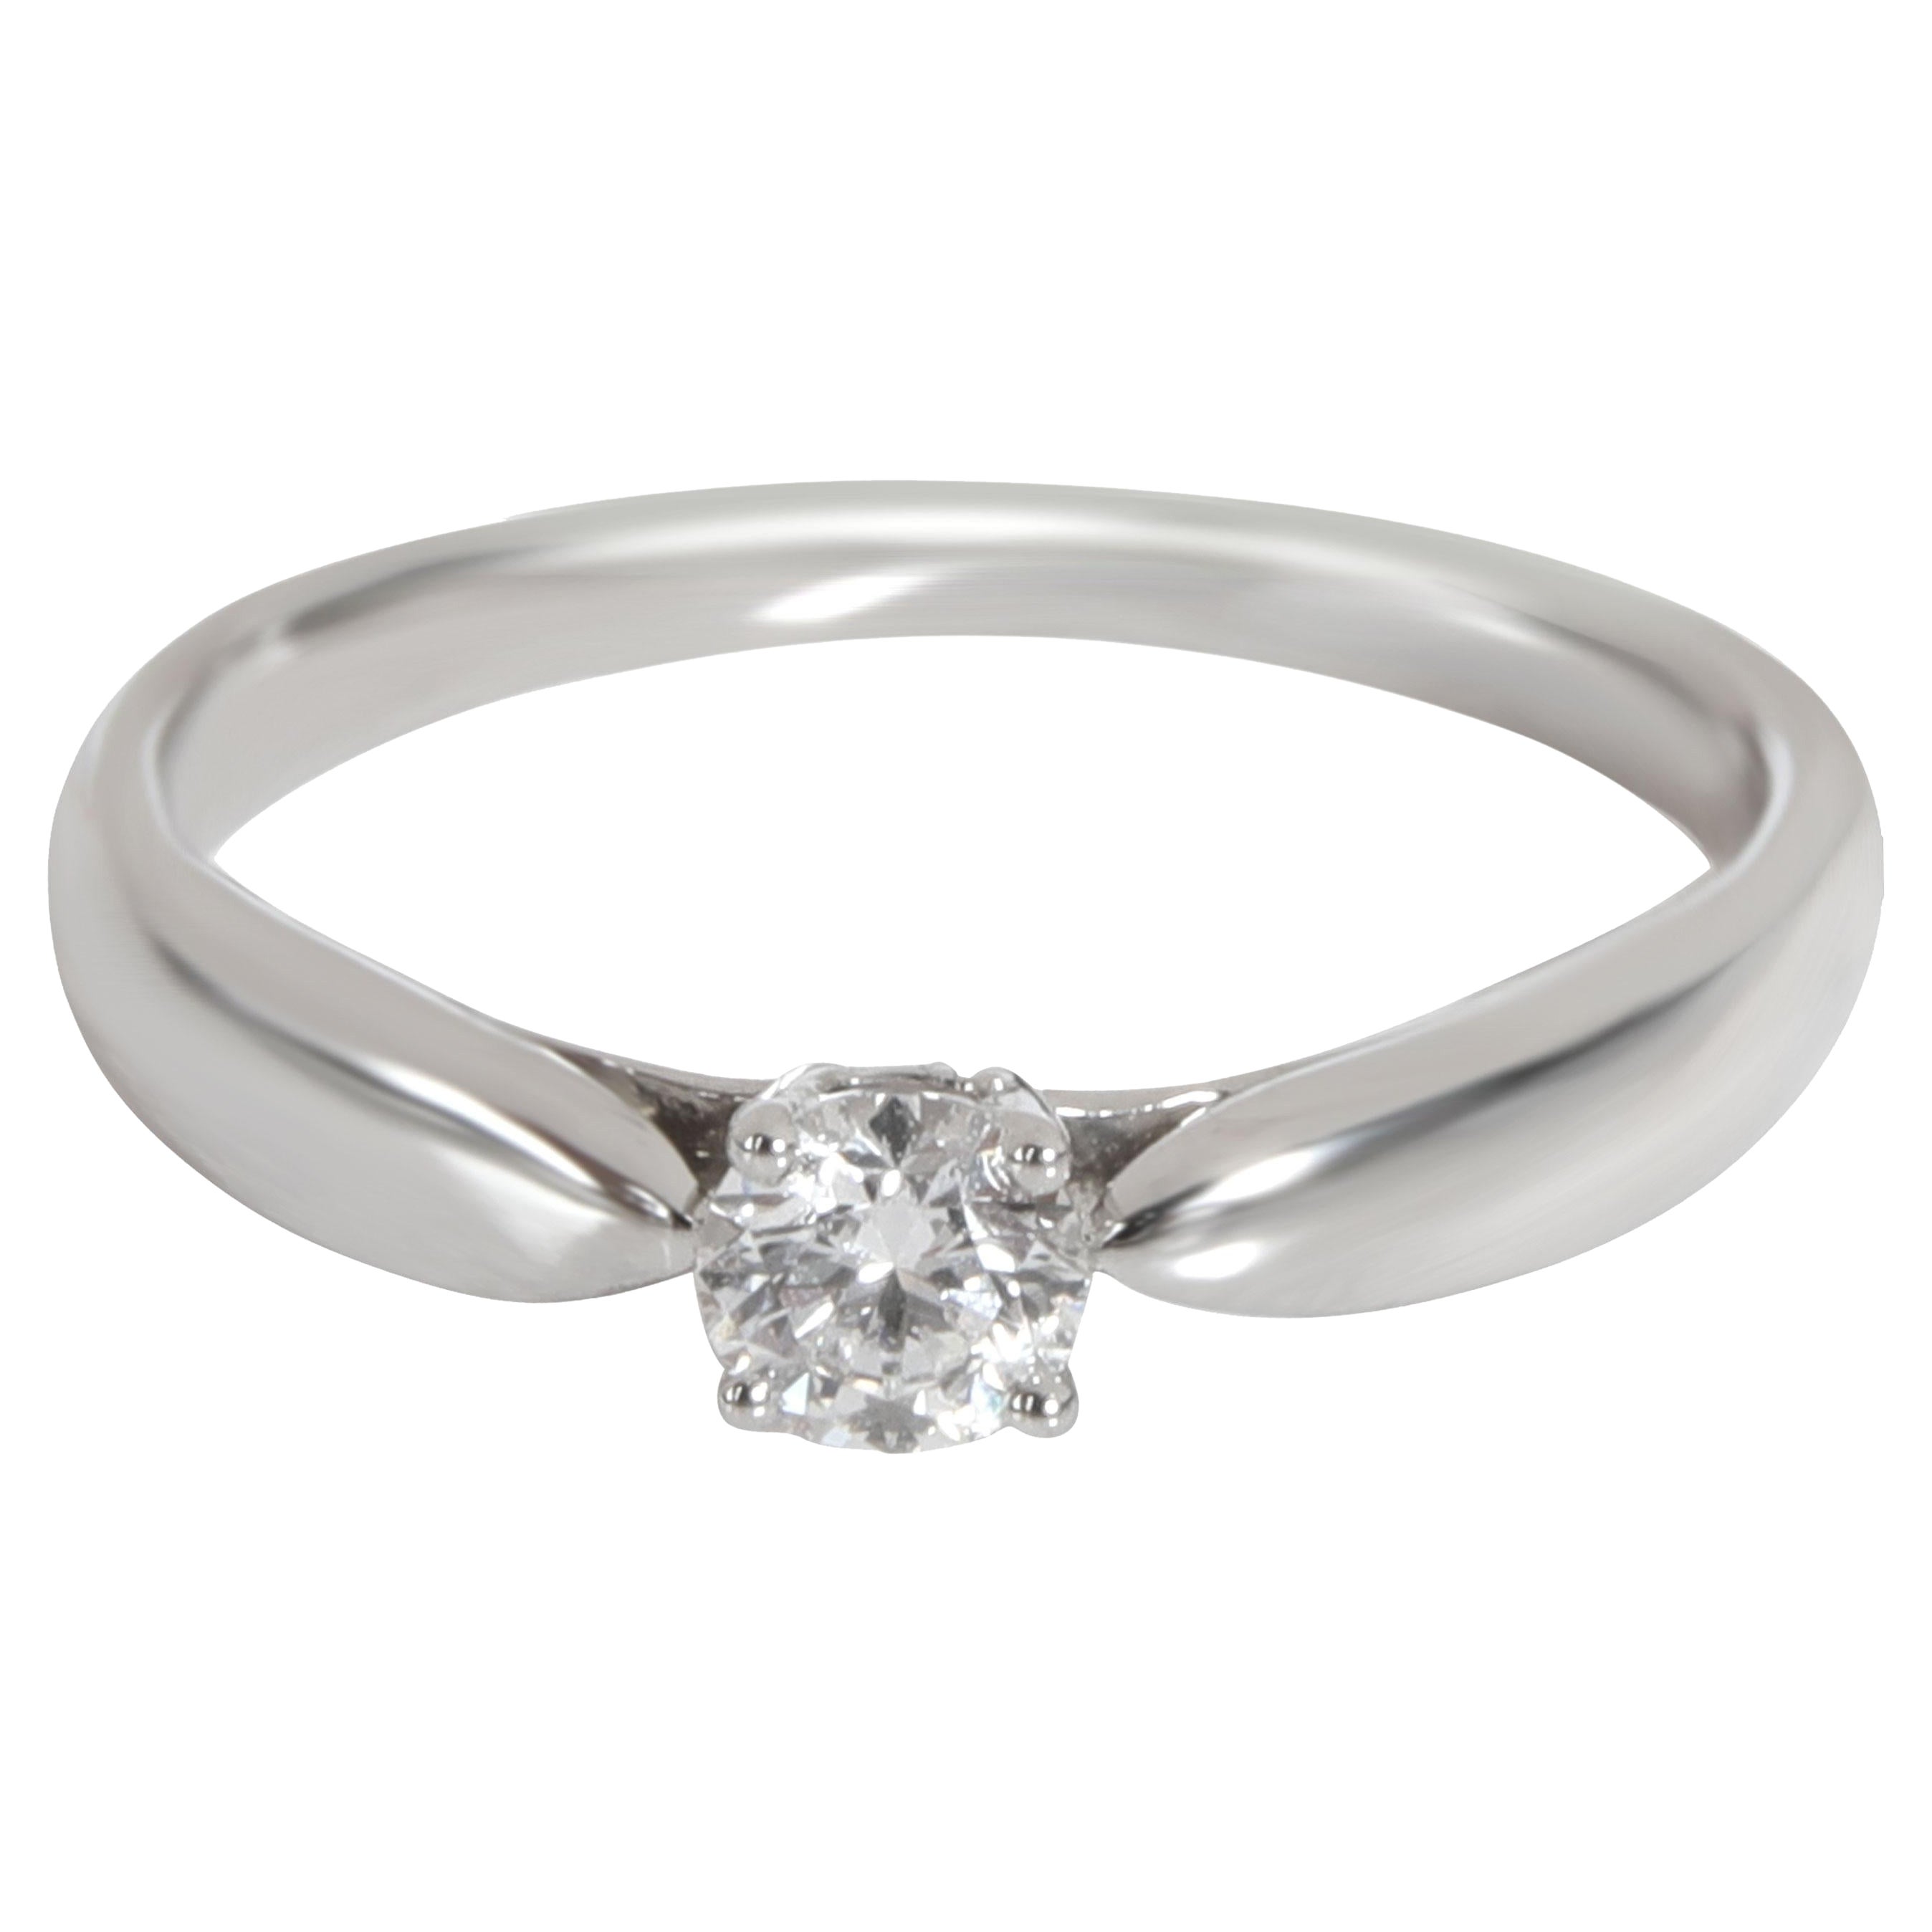 Tiffany & Co. Harmony Diamond Engagement Ring in Platinum E VS1 0.19 CTW